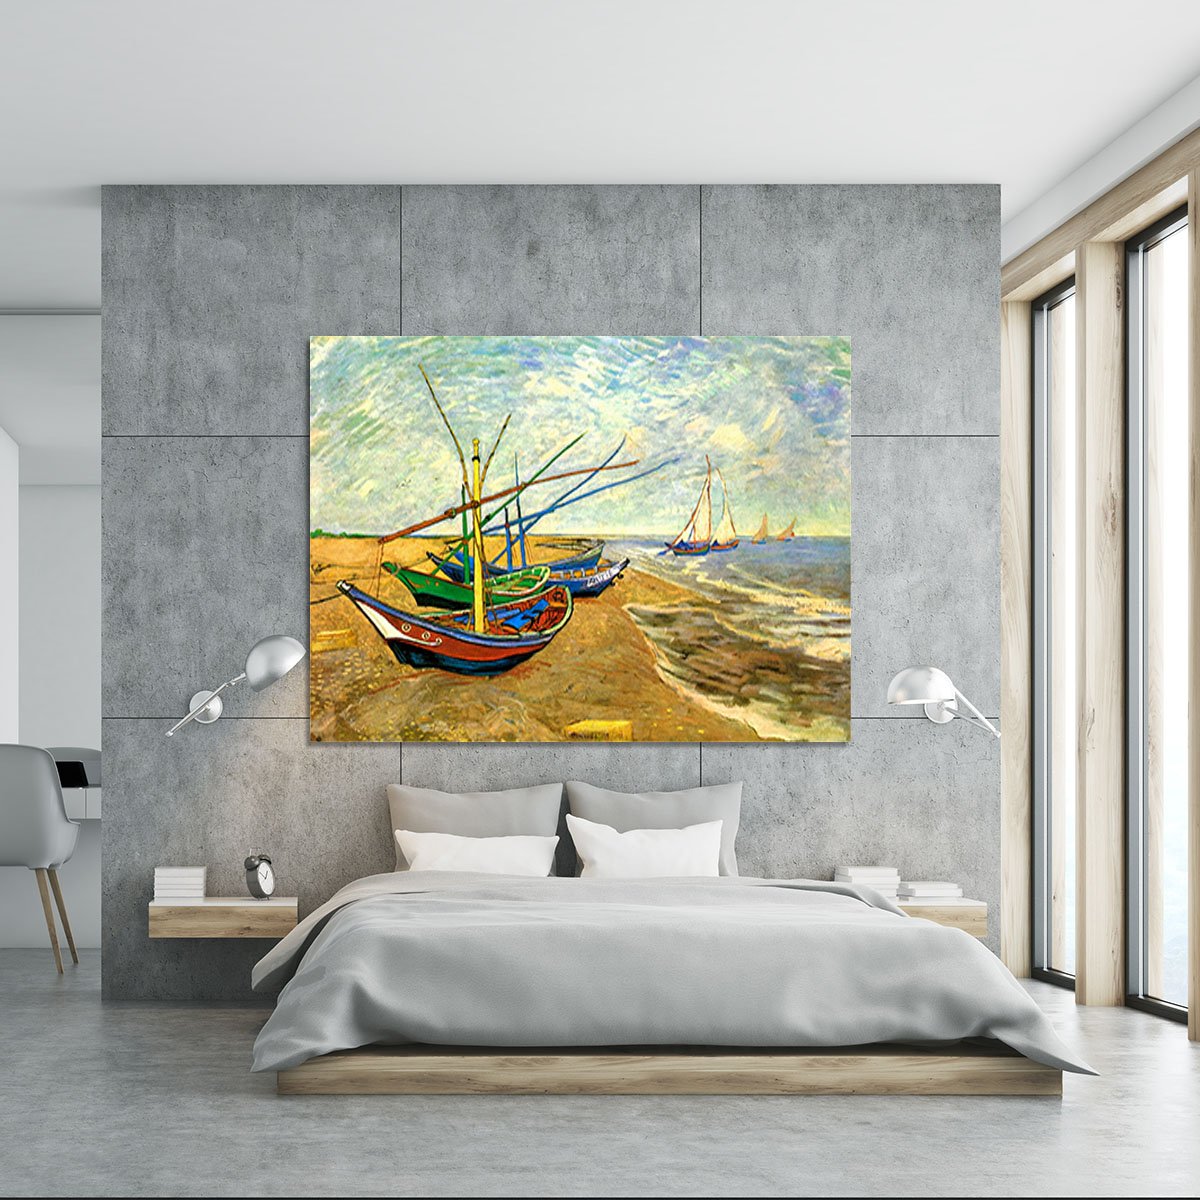 Fishing Boats on the Beach at Saintes-Maries by Van Gogh Canvas Print or Poster